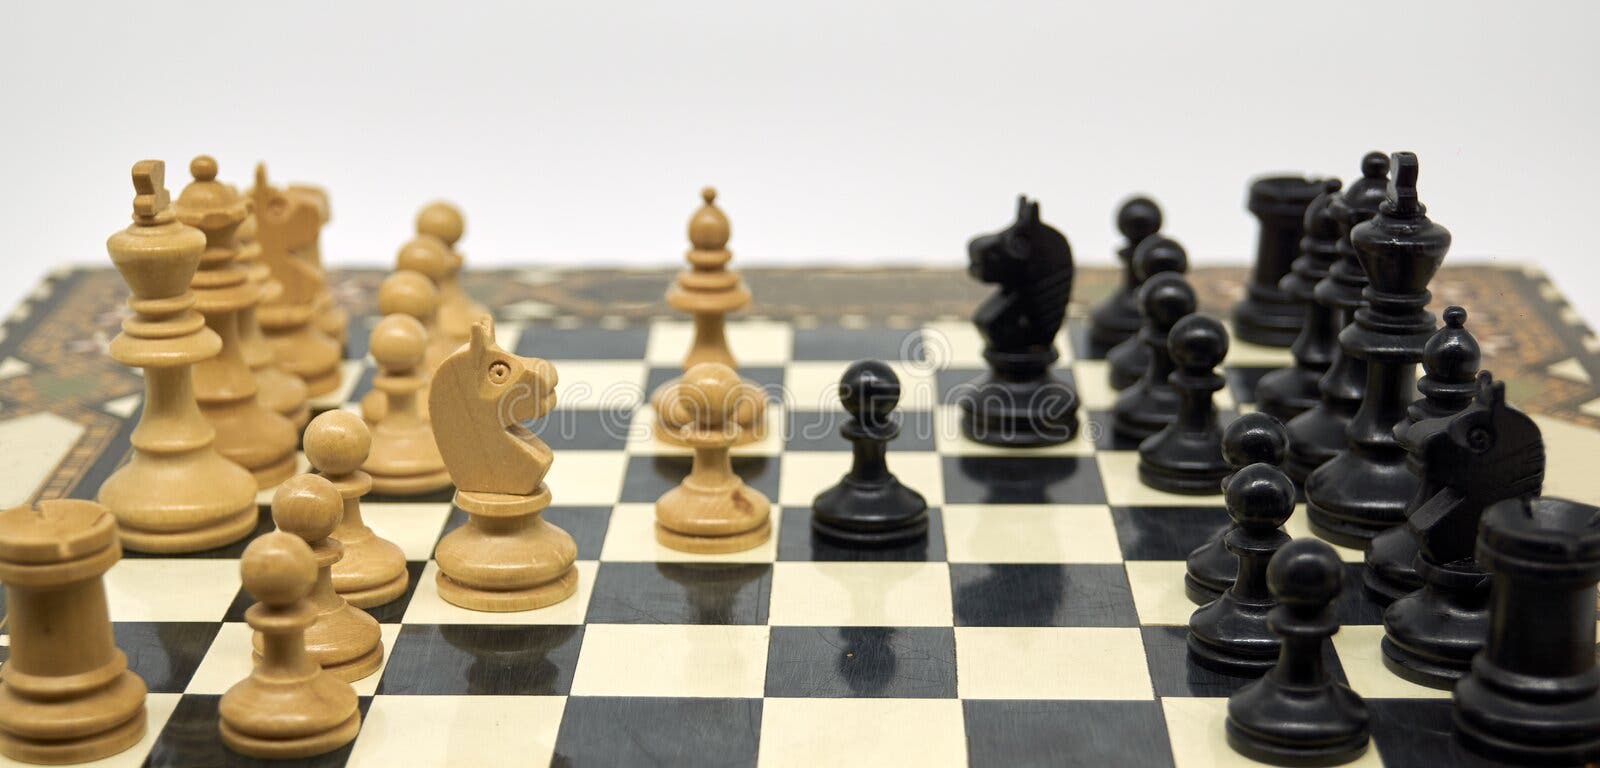 Chess Opening: Sicilian Defense Stock Photo - Alamy